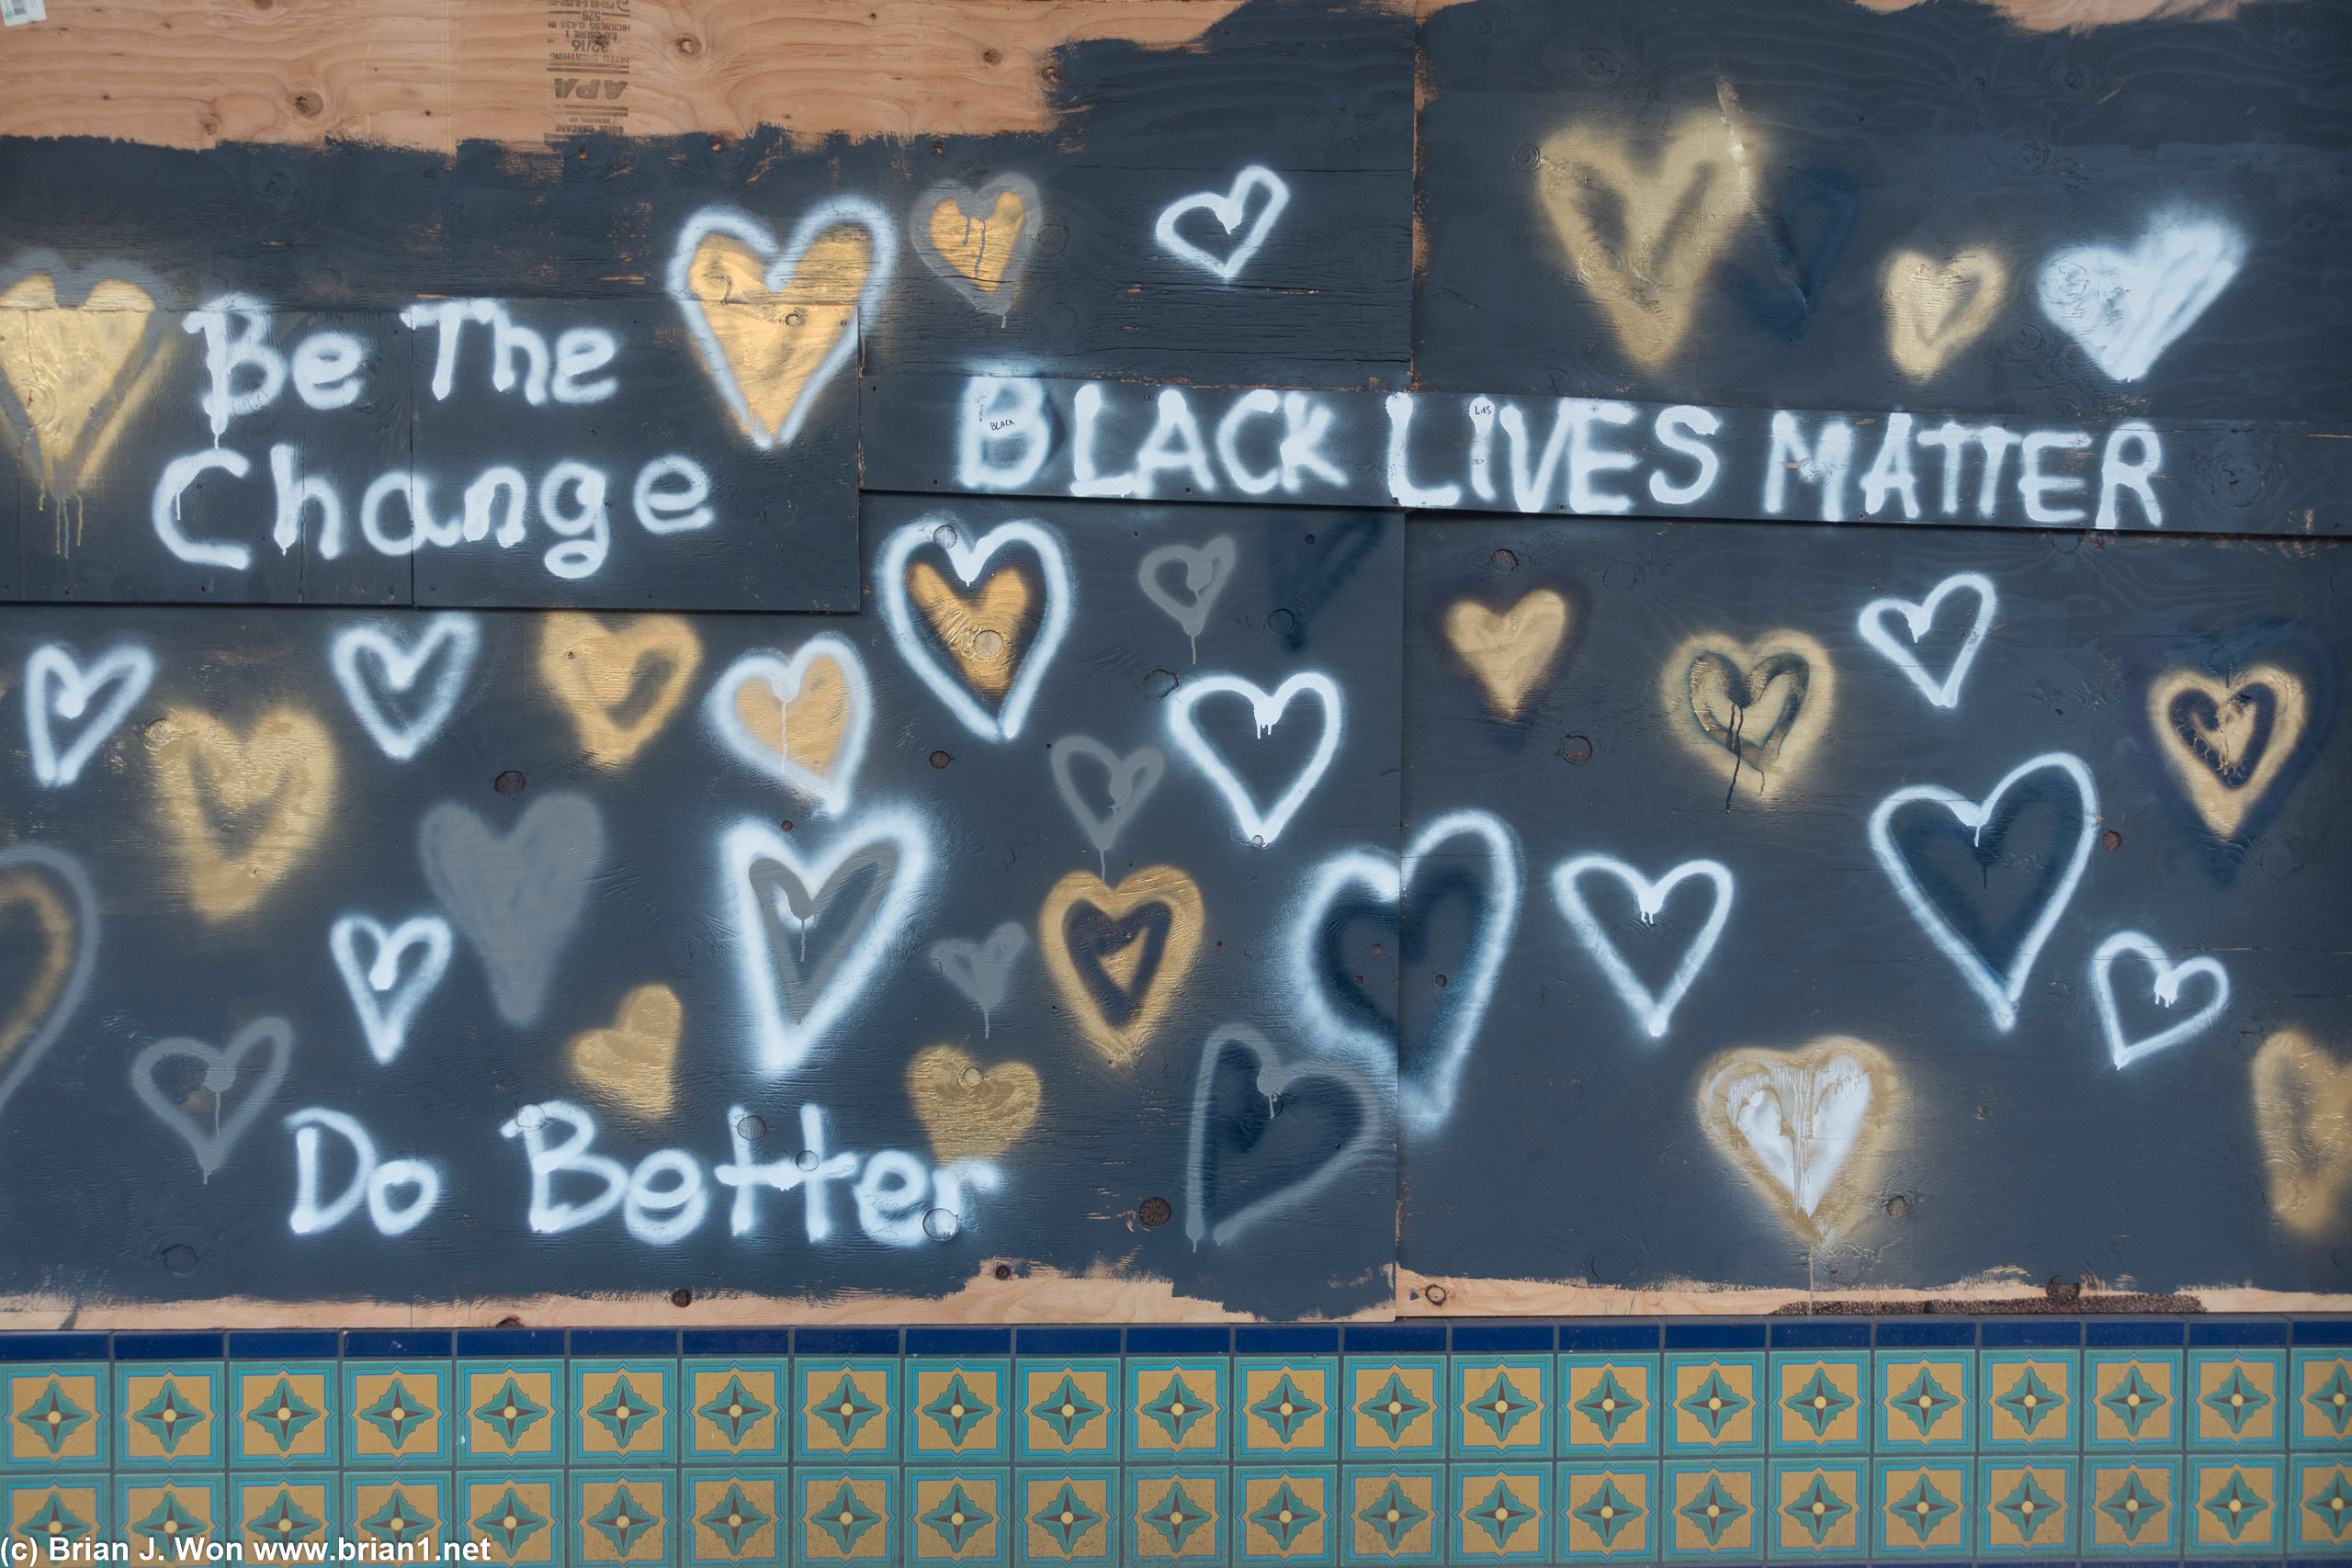 Supporting Black Lives Matter in Santa Monica.